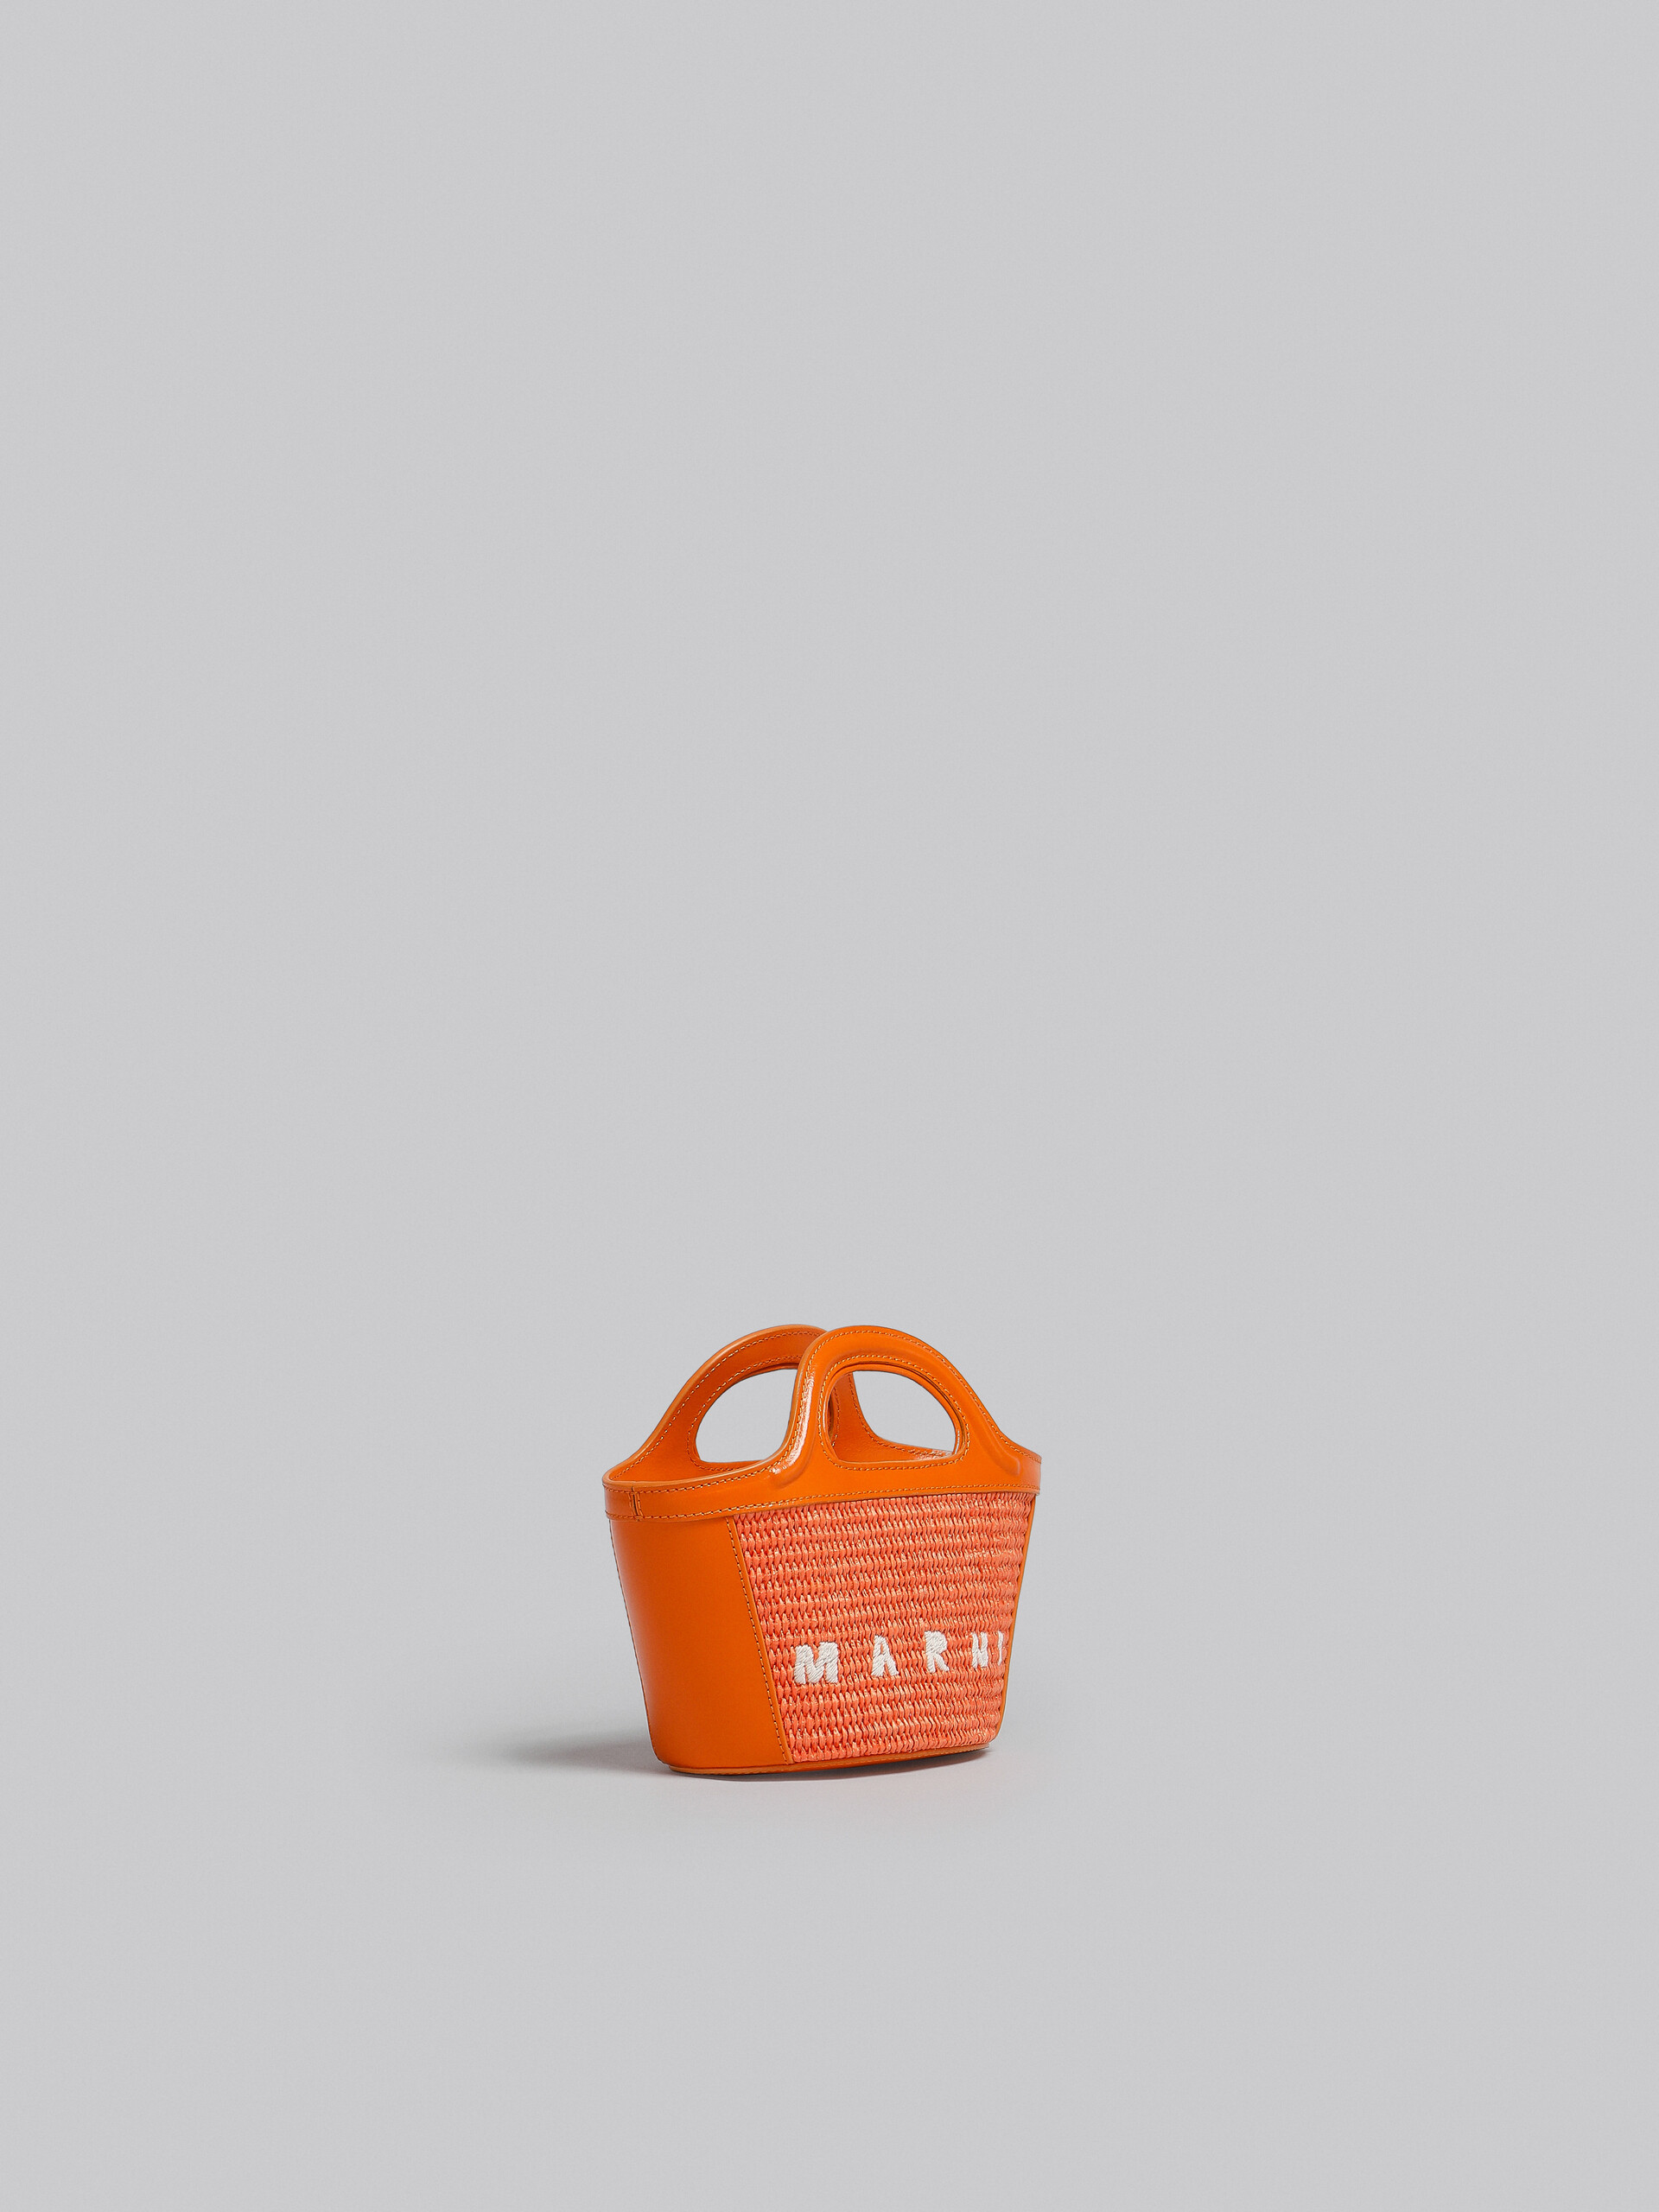 Tropicalia Micro Bag in orange leather and raffia - Handbag - Image 6